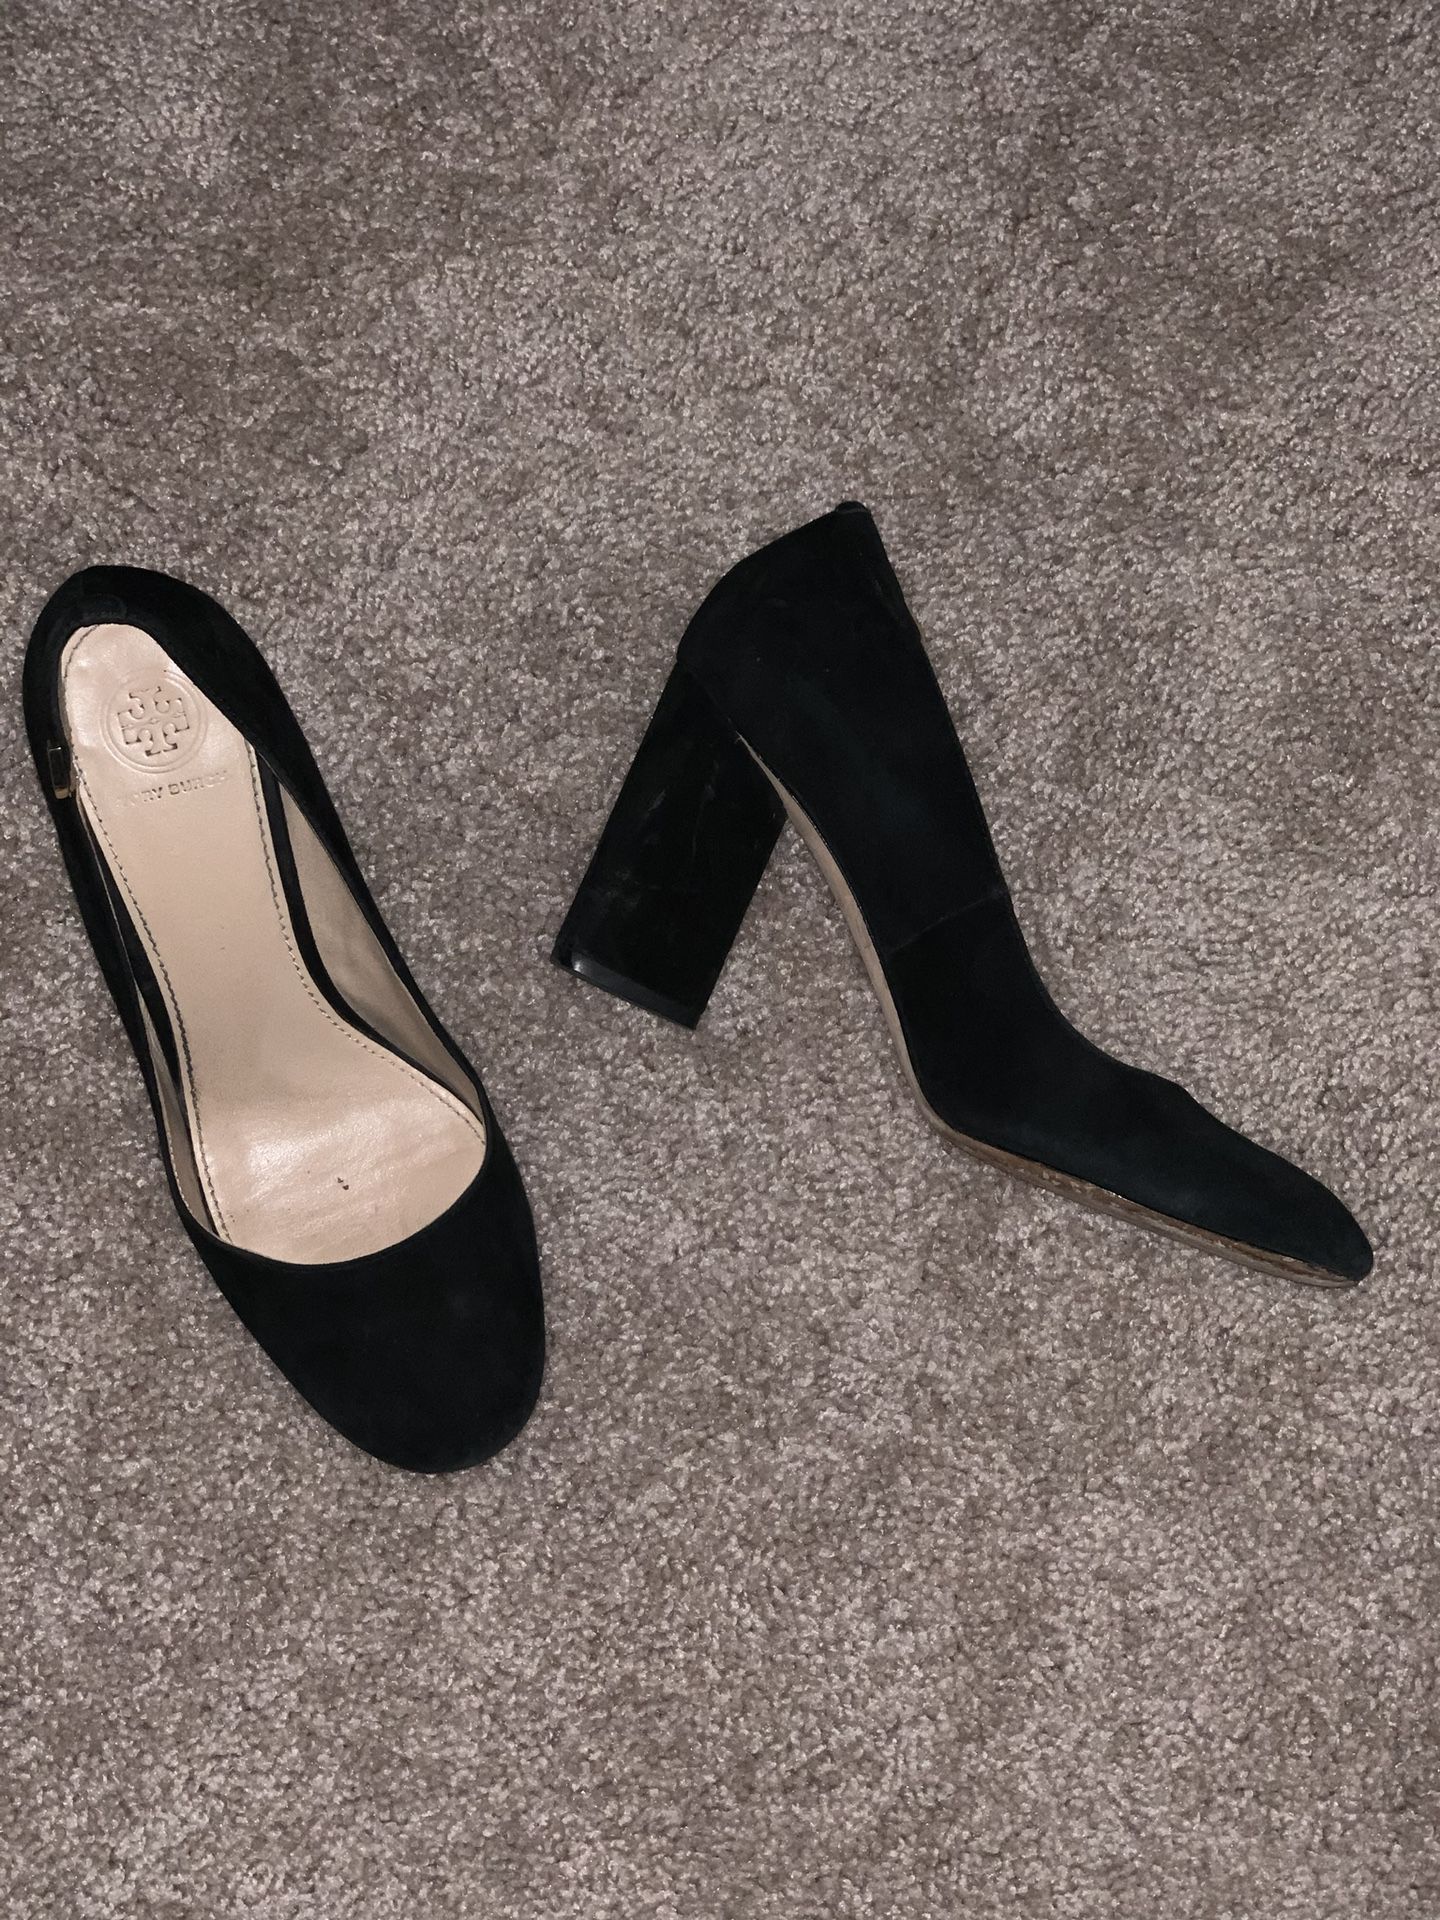 Tory Burch Black Suede heels, size 8.5